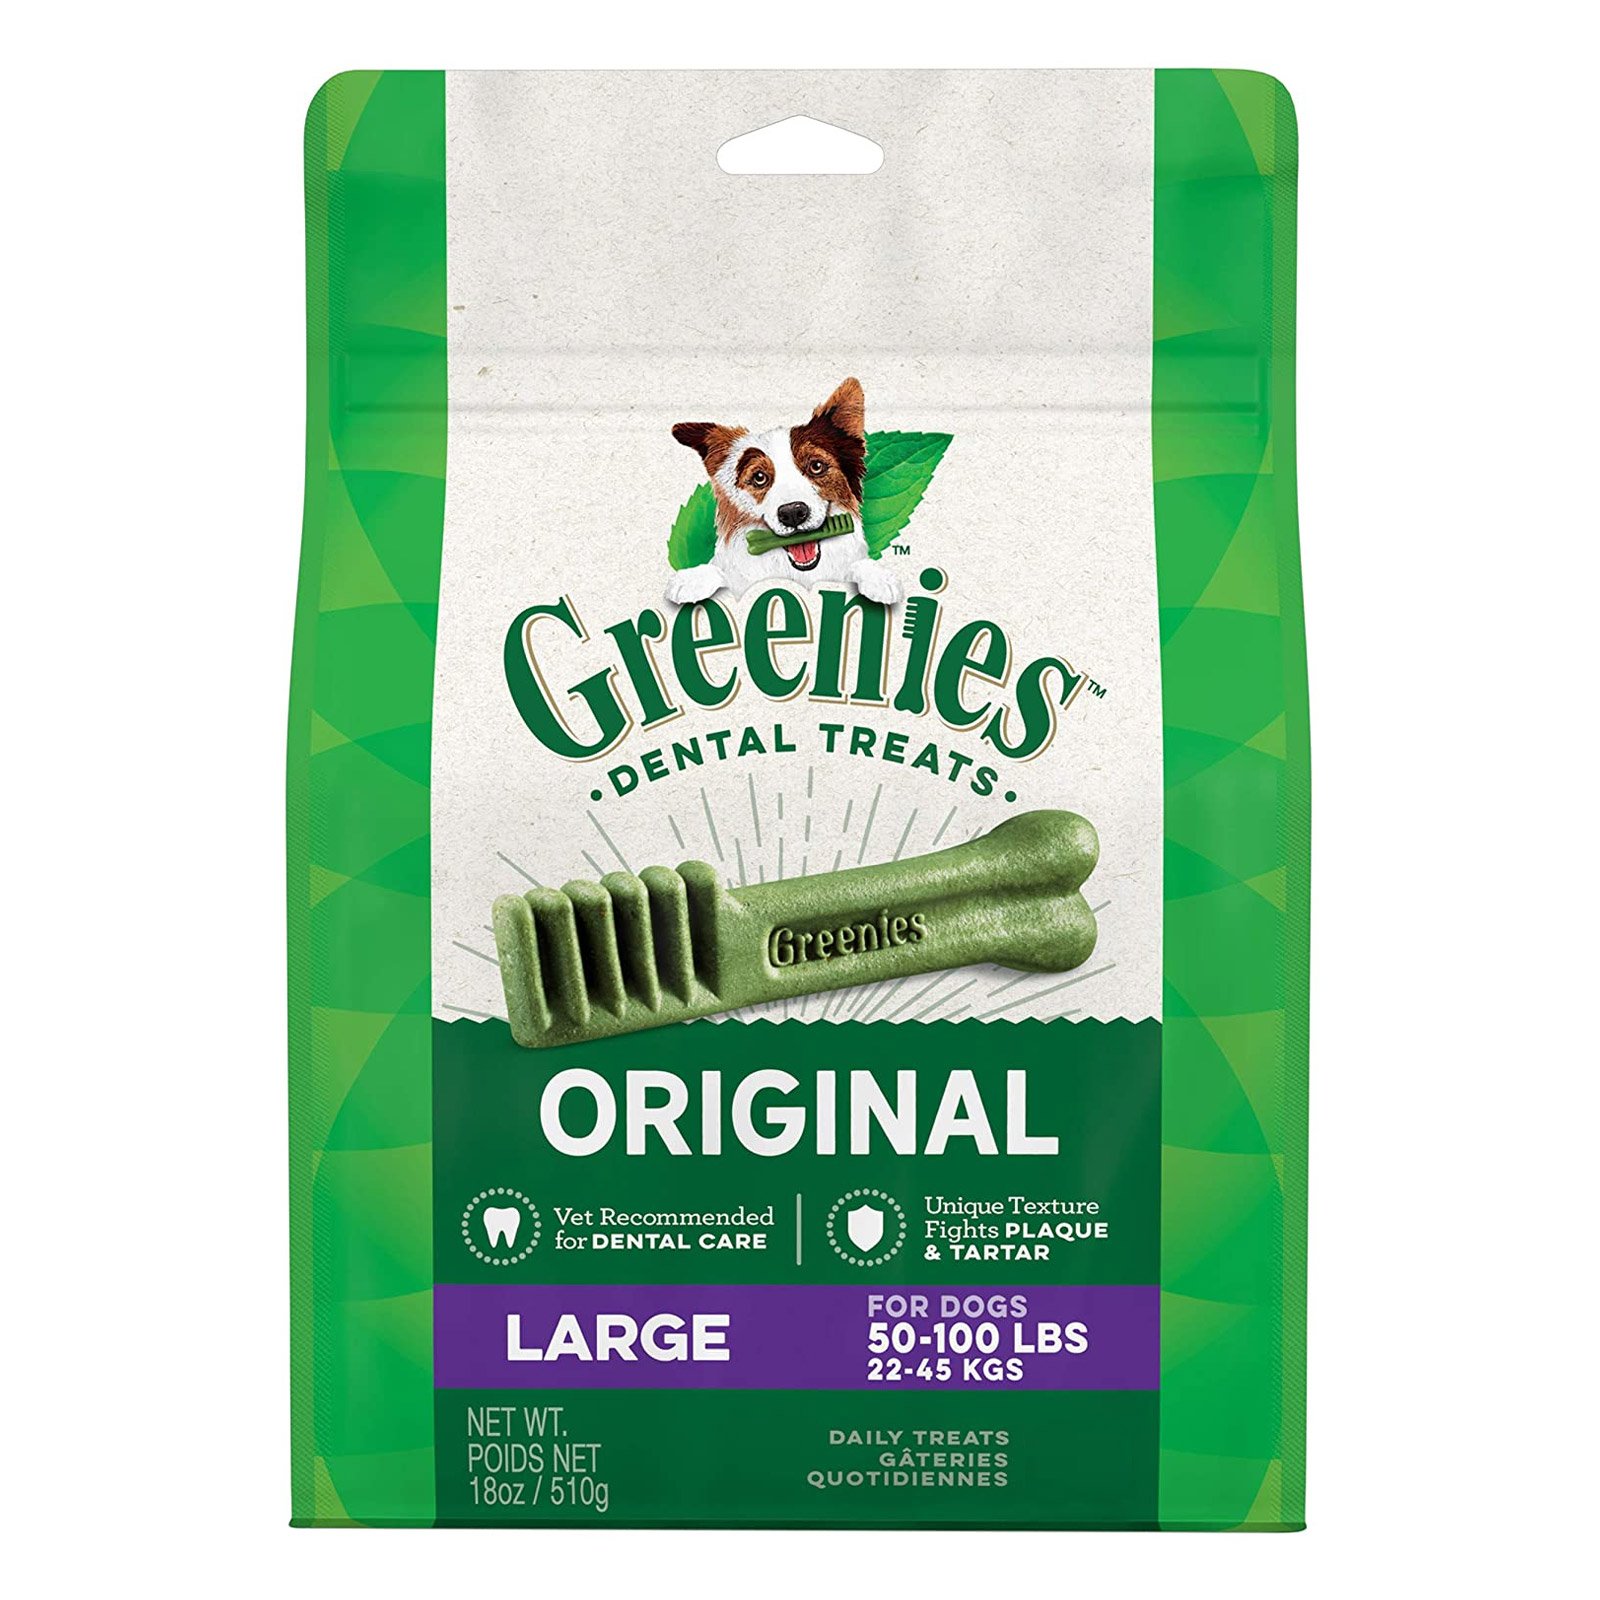 Greenies Original Dental Treats Large For Dogs 22-45 Kg